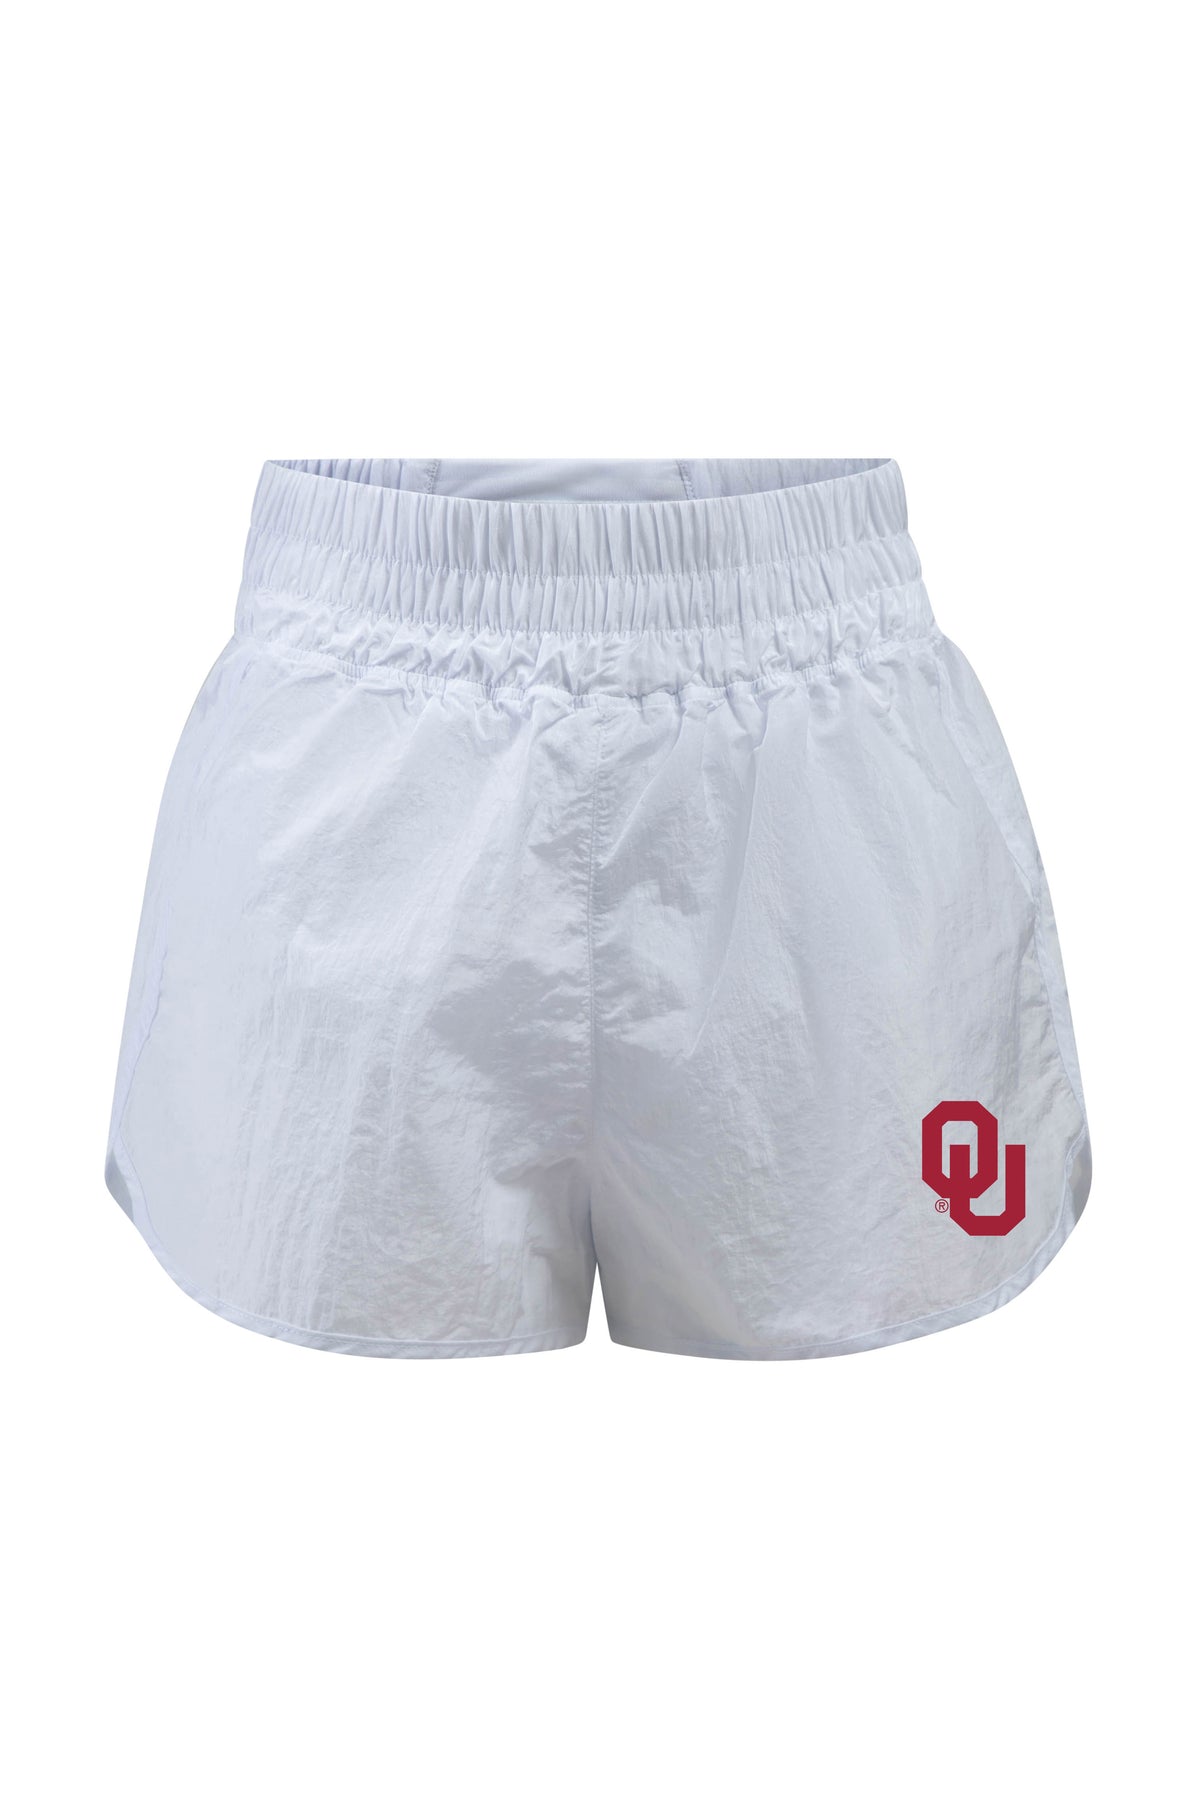 University of Oklahoma Boxer Short